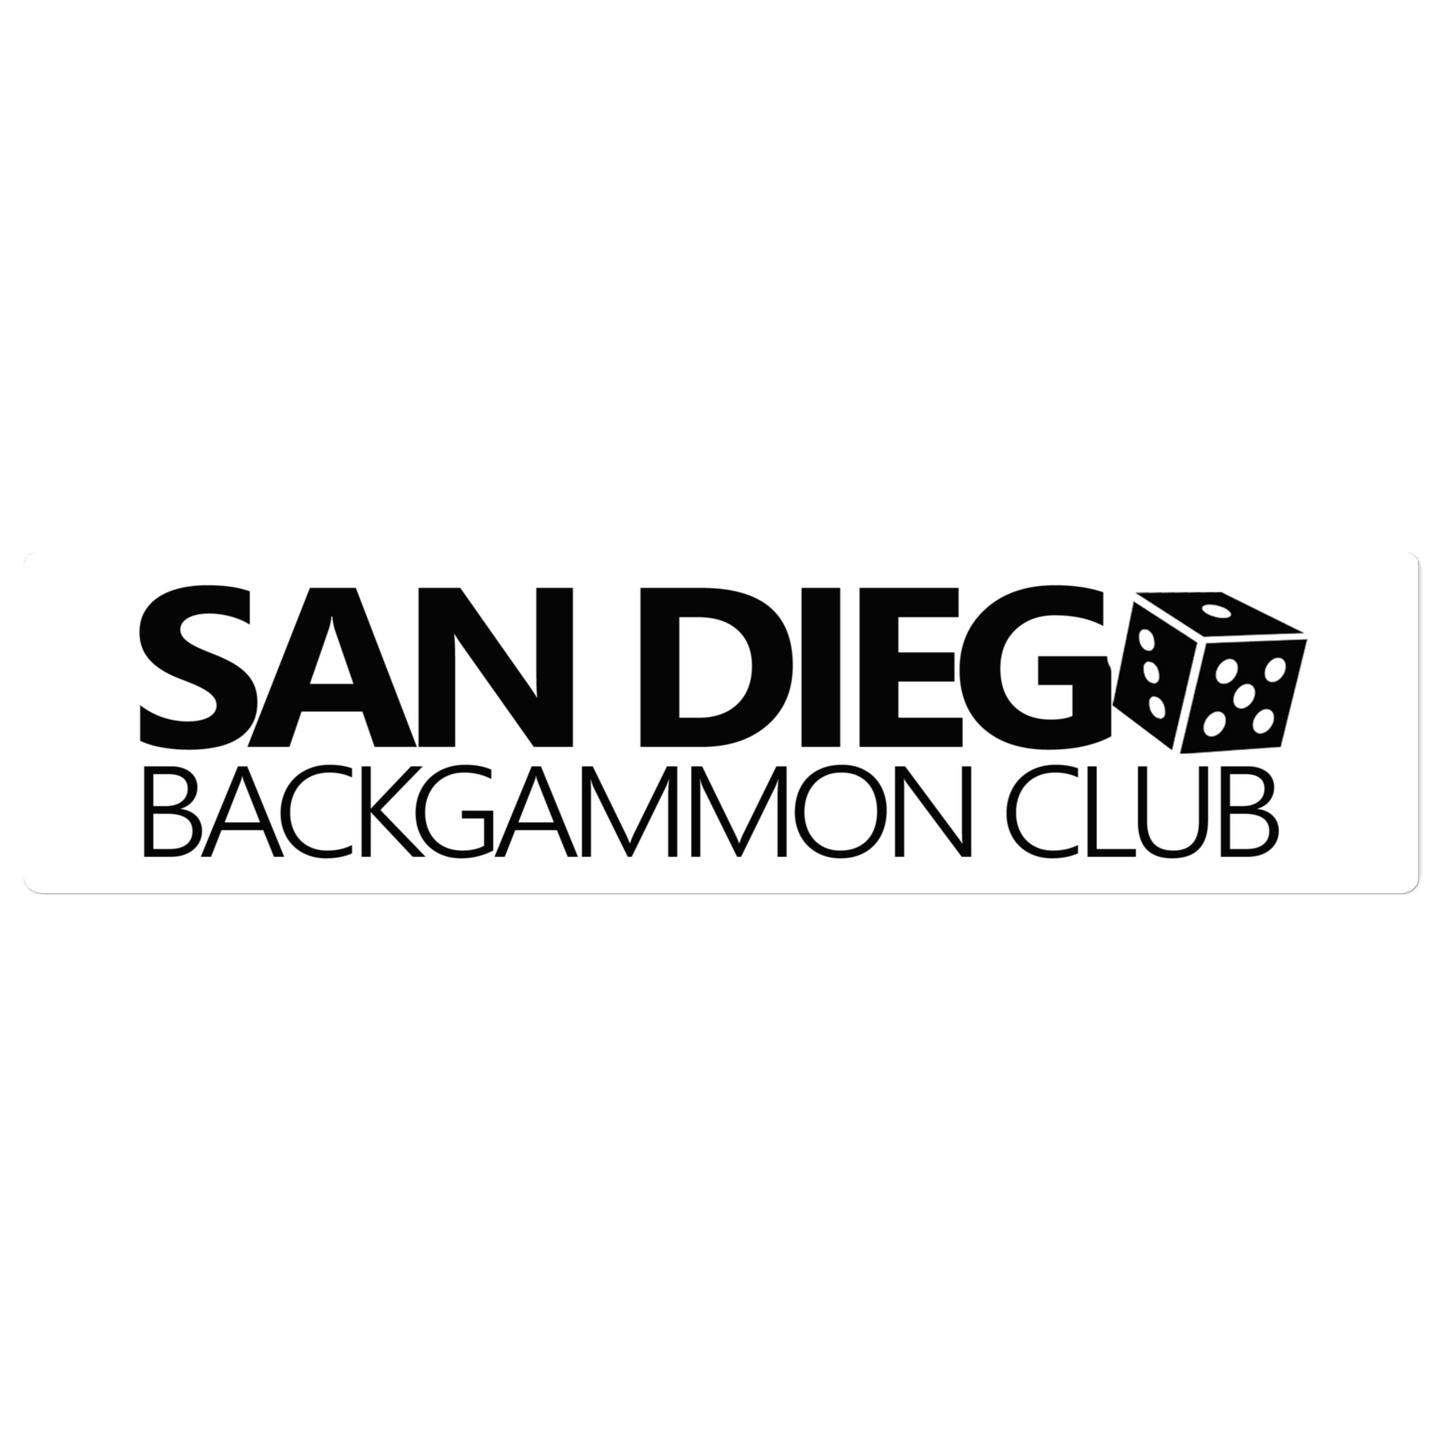 SAN DIEGO BACKGAMMON CLUB Bumper Sticker (Black/White)